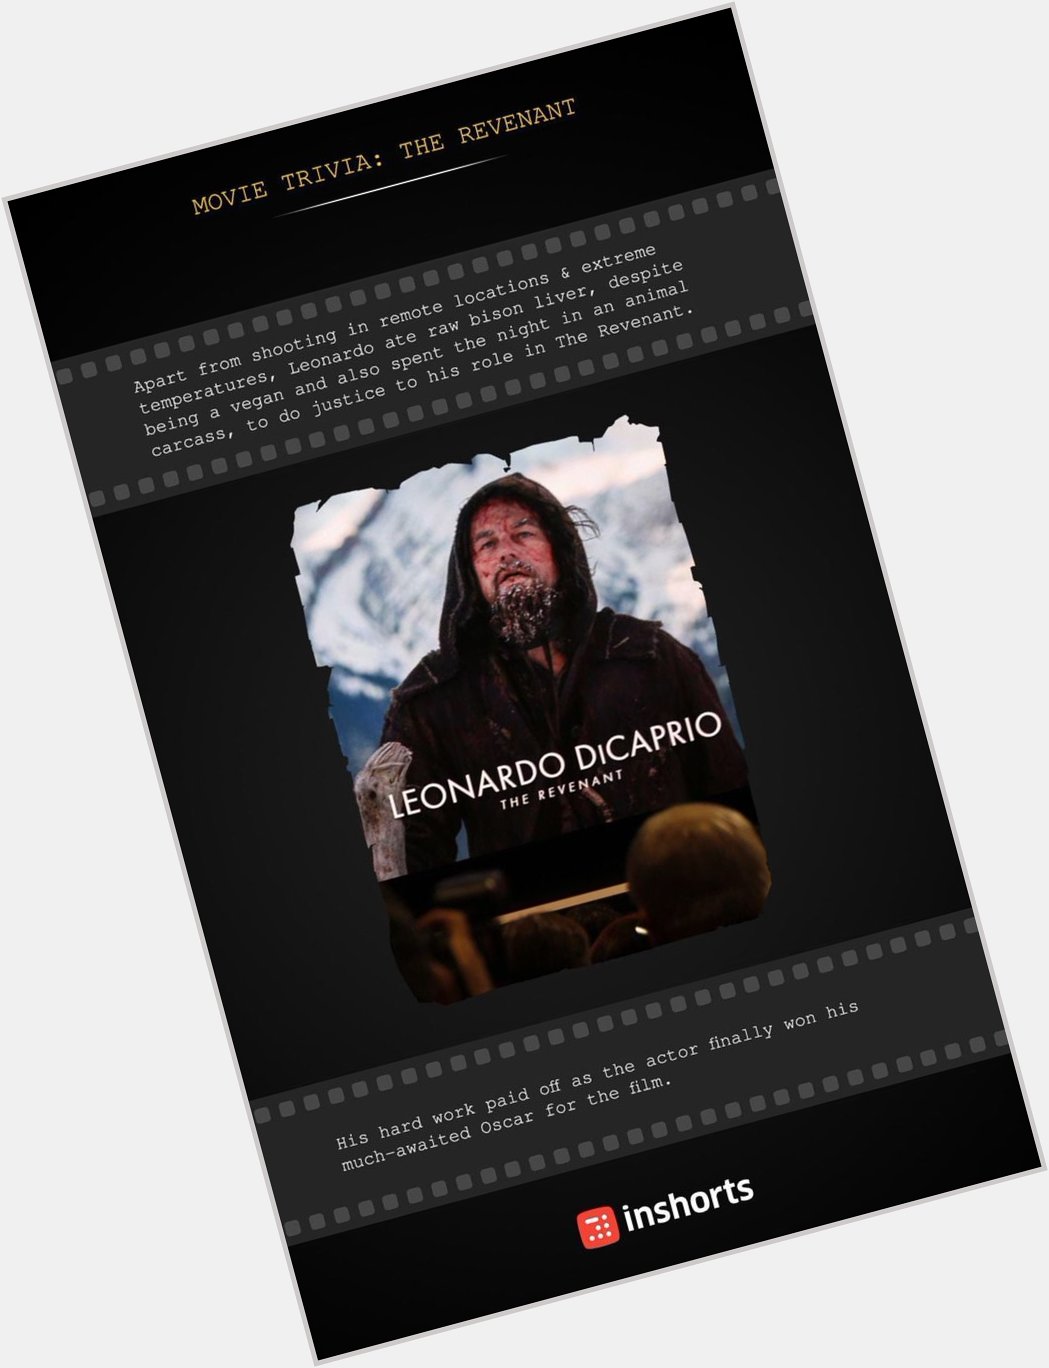 Happy Birthday to great actor Leonardo dicaprio 